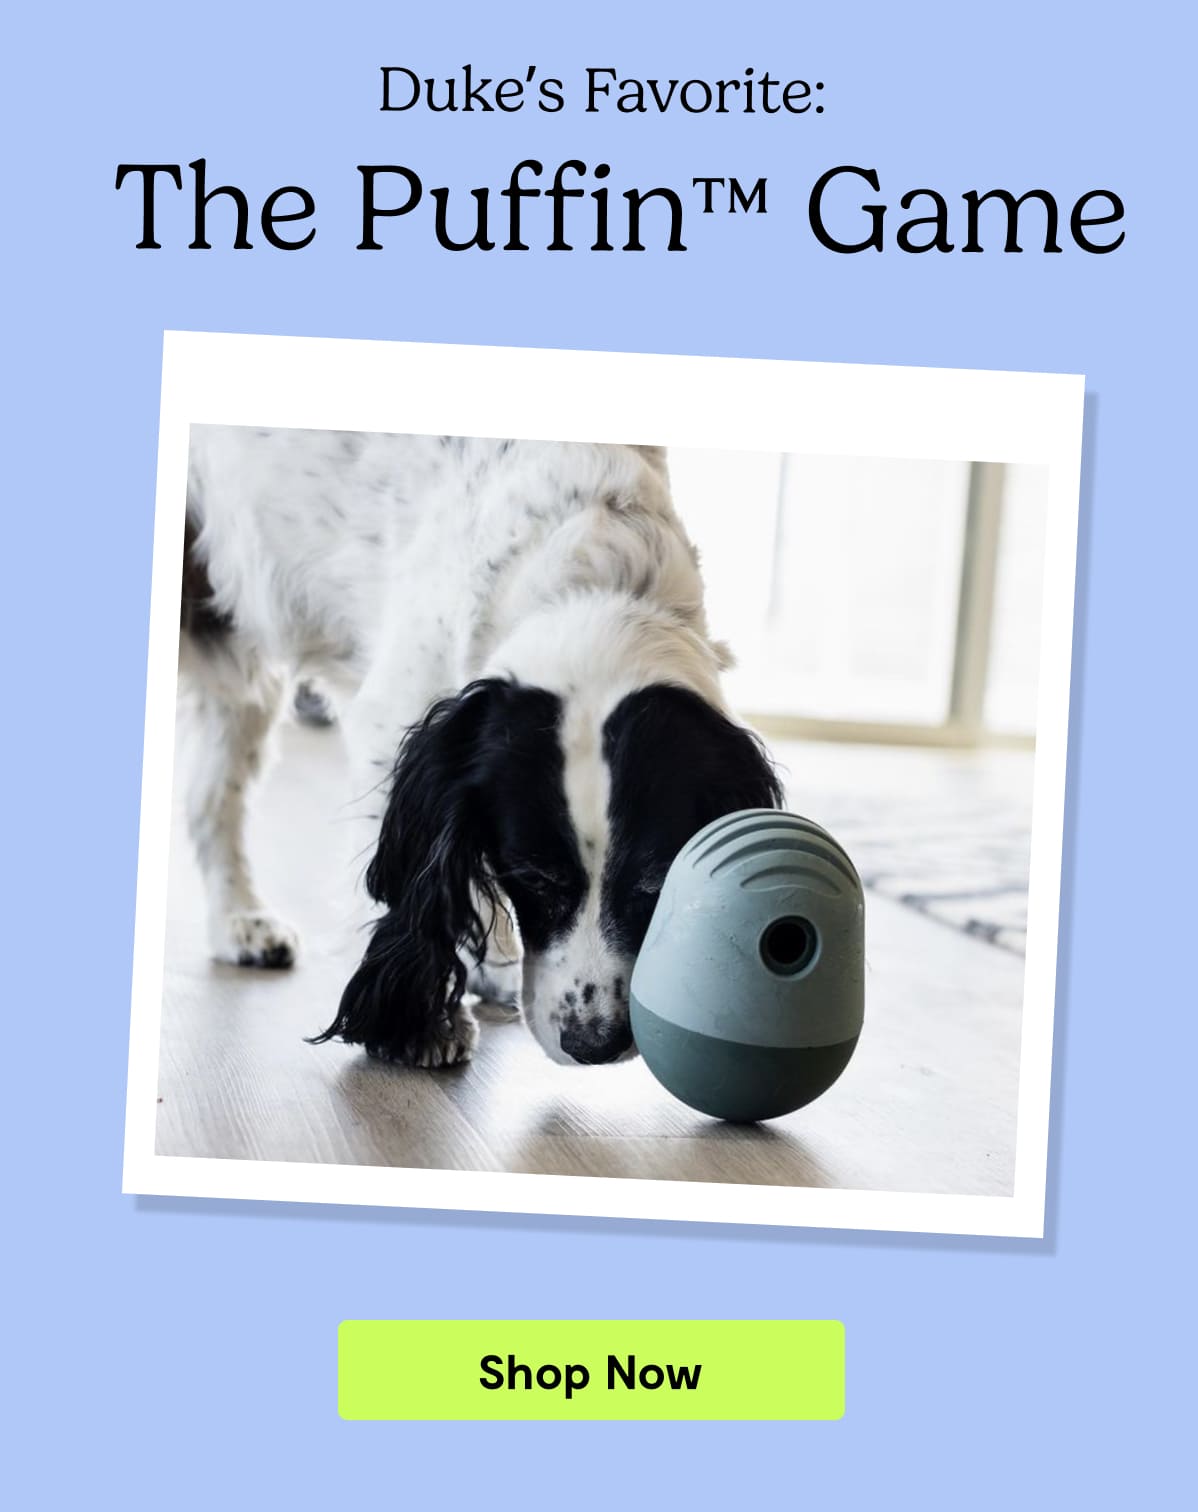 Duke's favorite: The Puffin Game